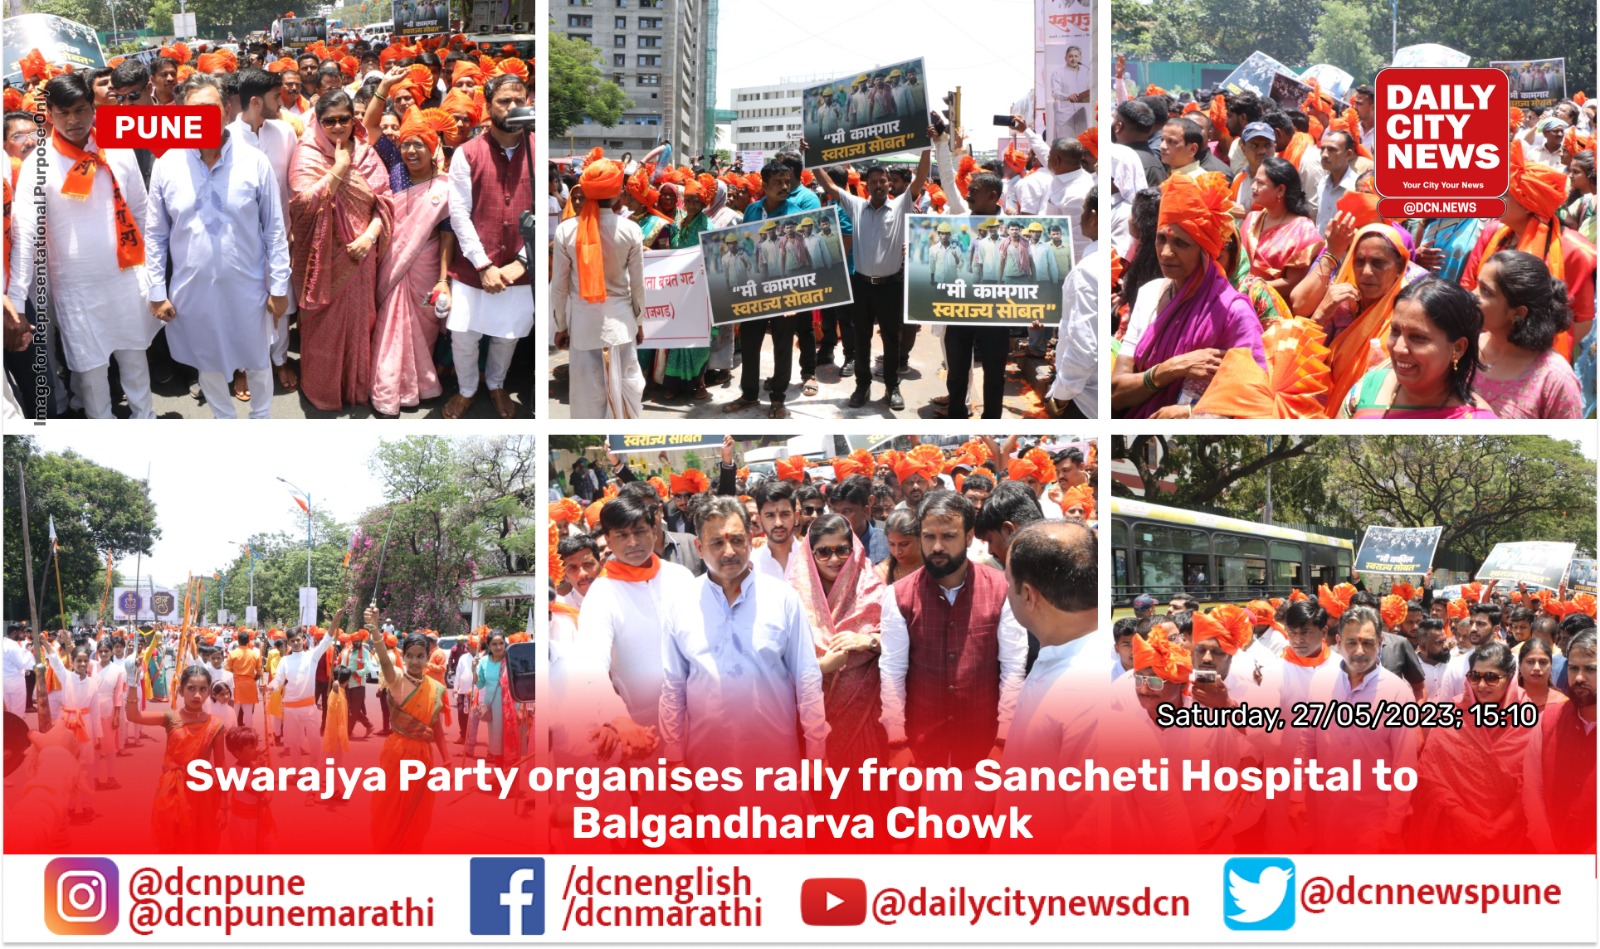  Swarajya Party organises rally from Sancheti Hospital to Balgandharva Chowk